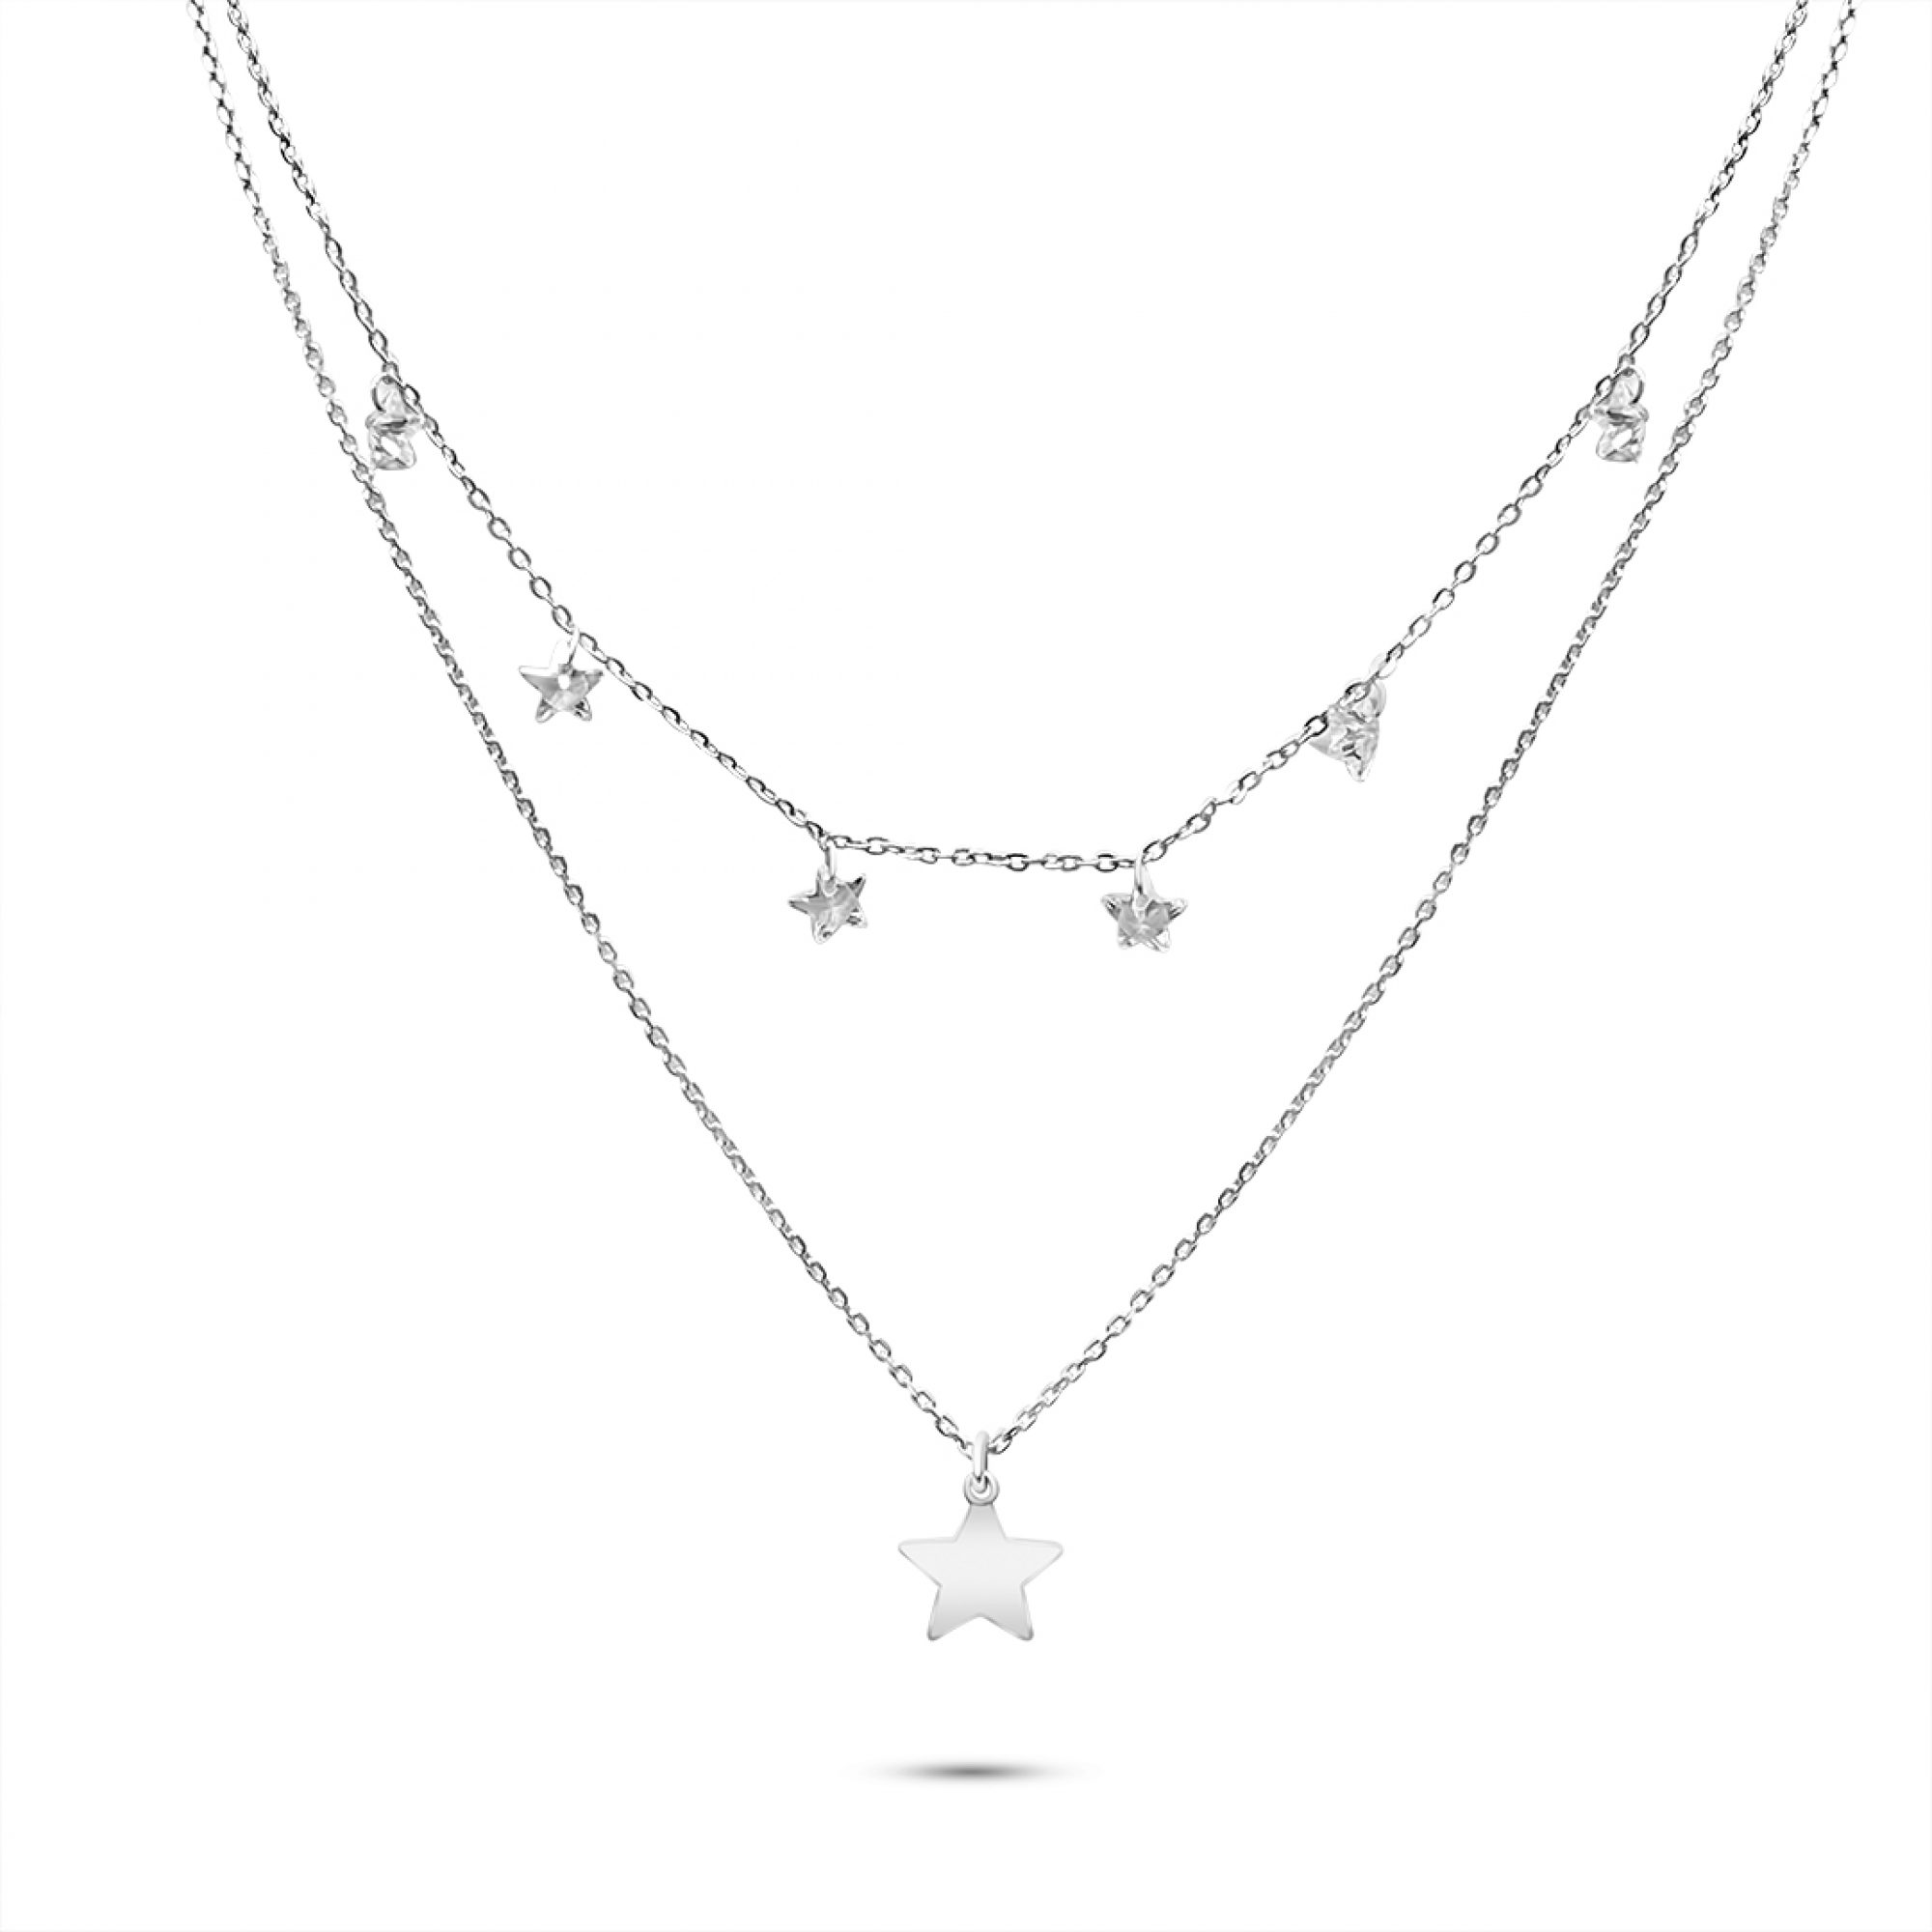 Double star necklace with zircon stones